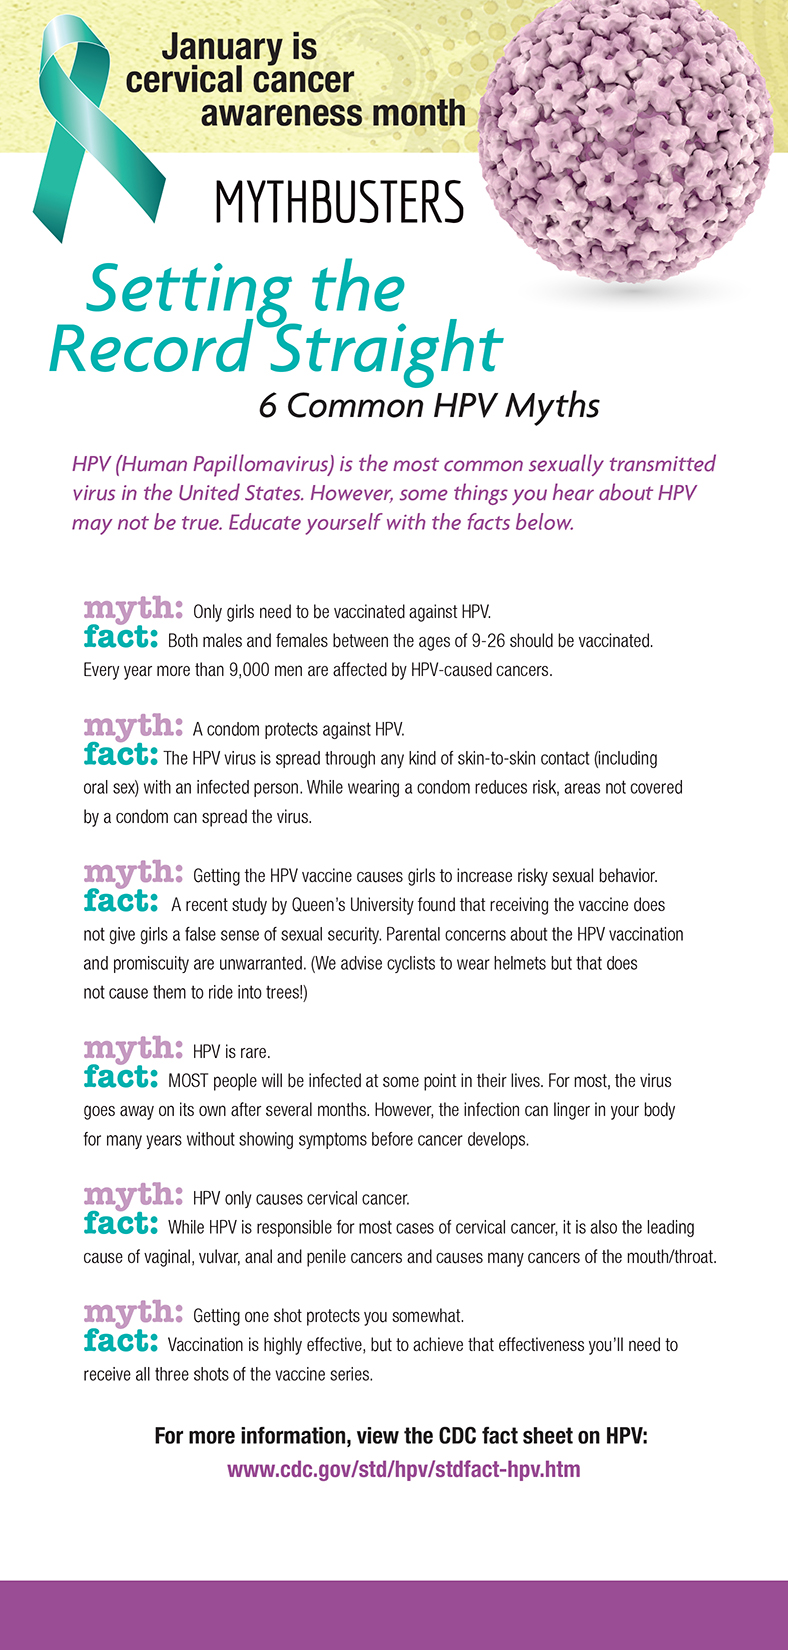 Genital hpv infection fact sheet. Genital hpv cdc fact sheet - Genital hpv cdc fact sheet